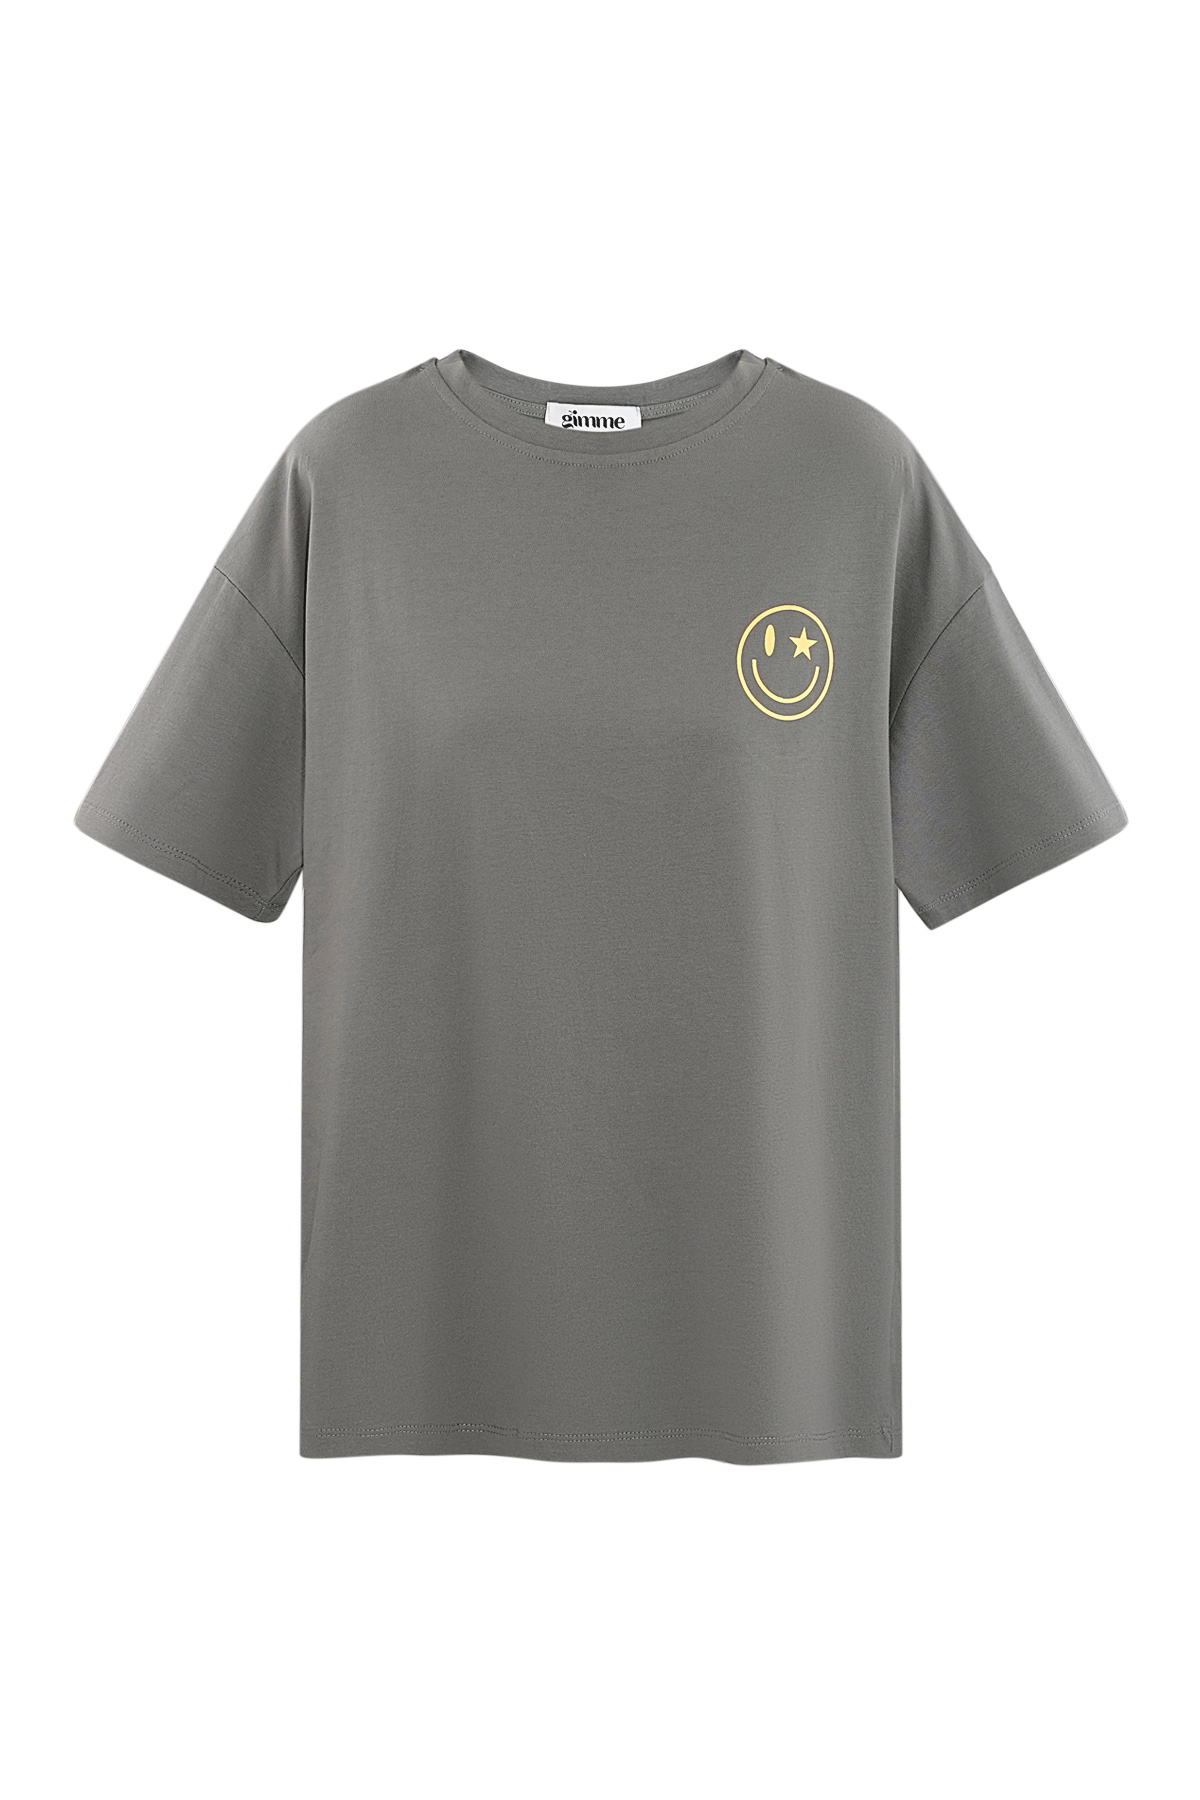 T-shirt happy life smiley - gray